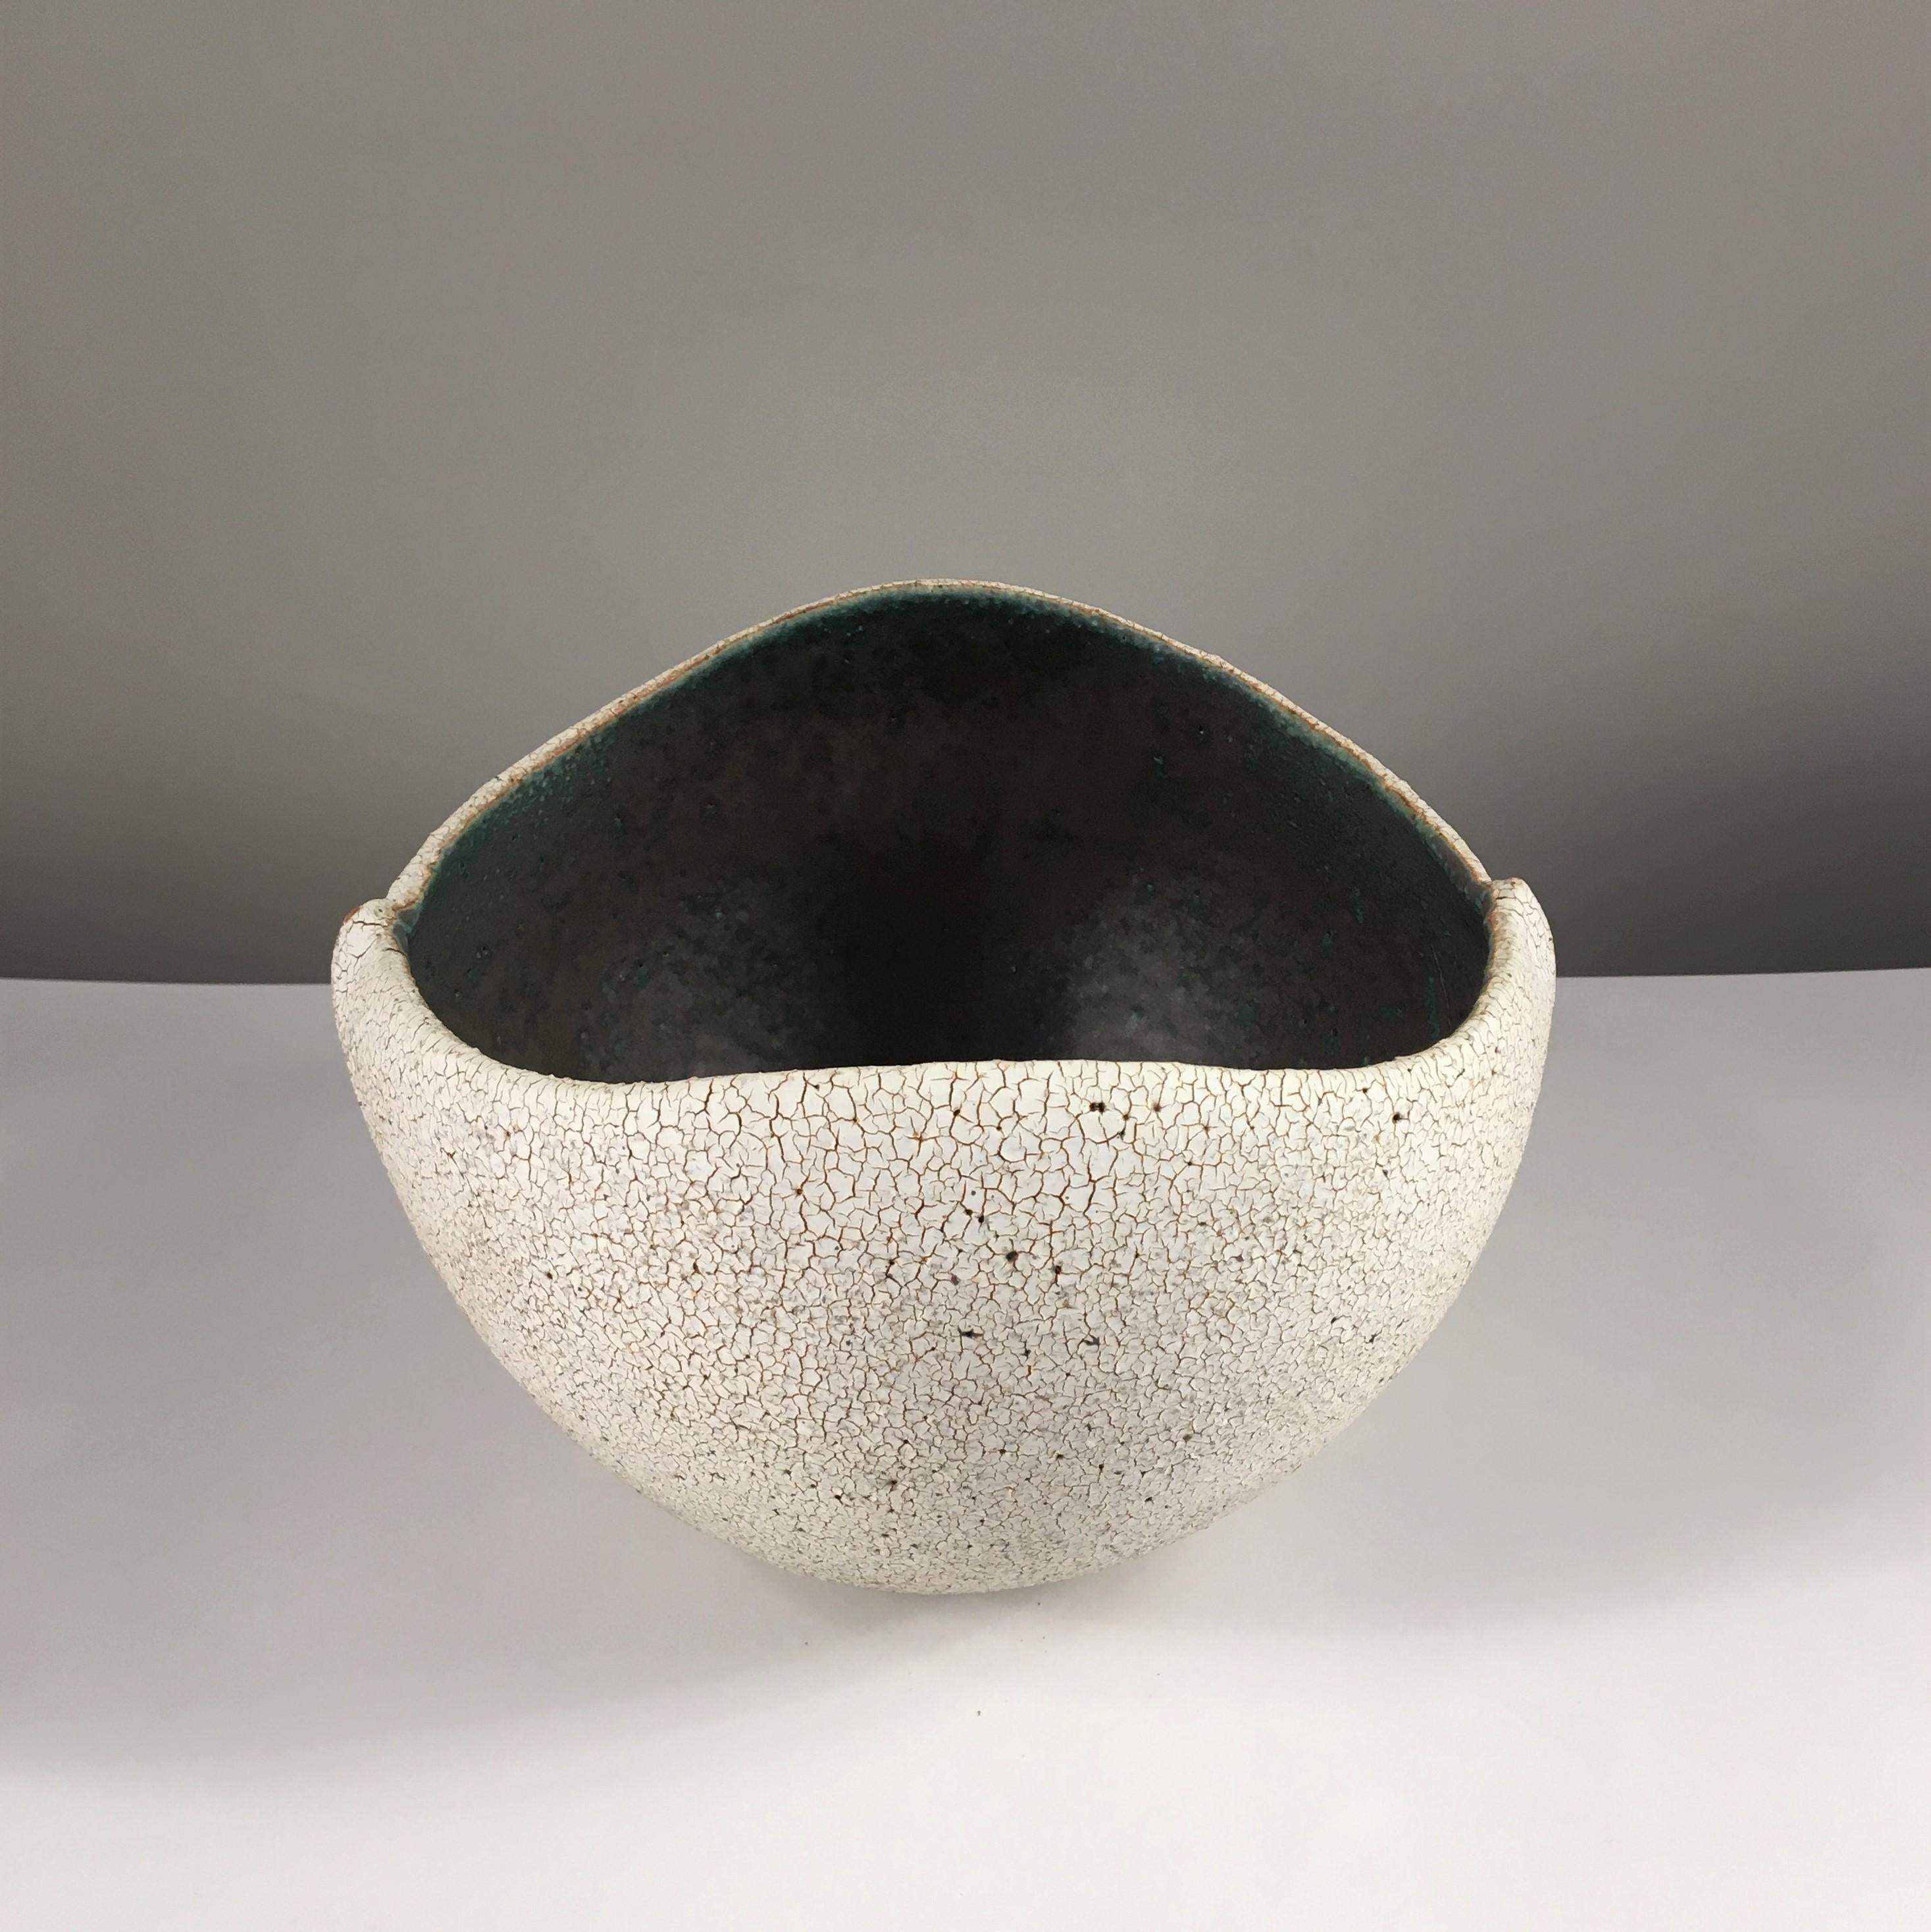 Ceramic Boat Shape Bowl with Glaze by Yumiko Kuga. Dimensions: H 5.75